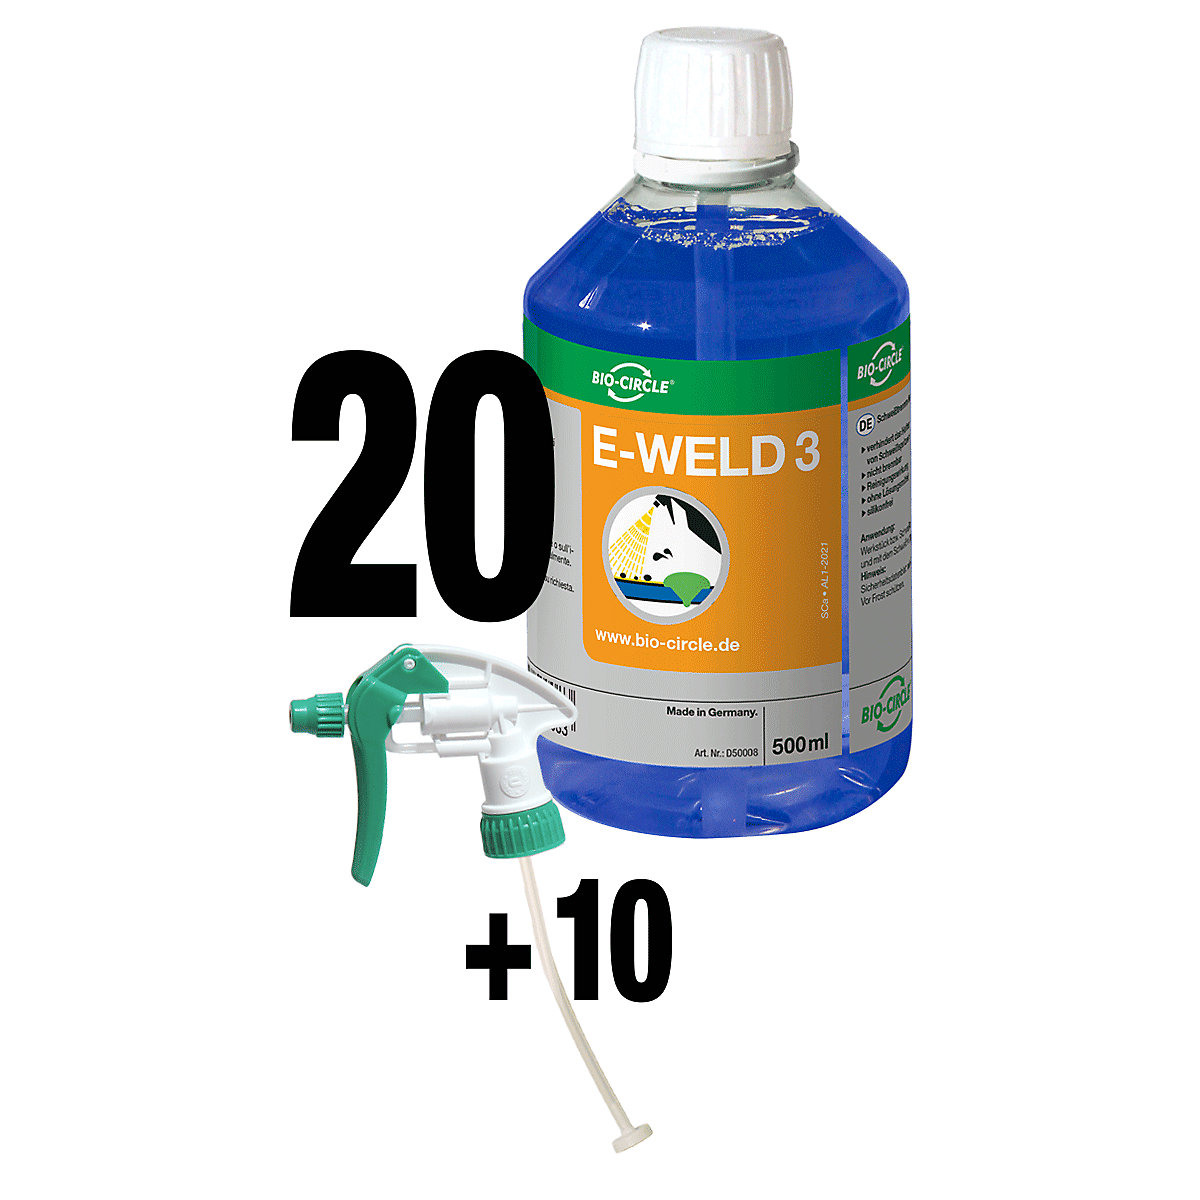 Spawalniczy spray ochronny E-WELD 3 - Bio-Circle